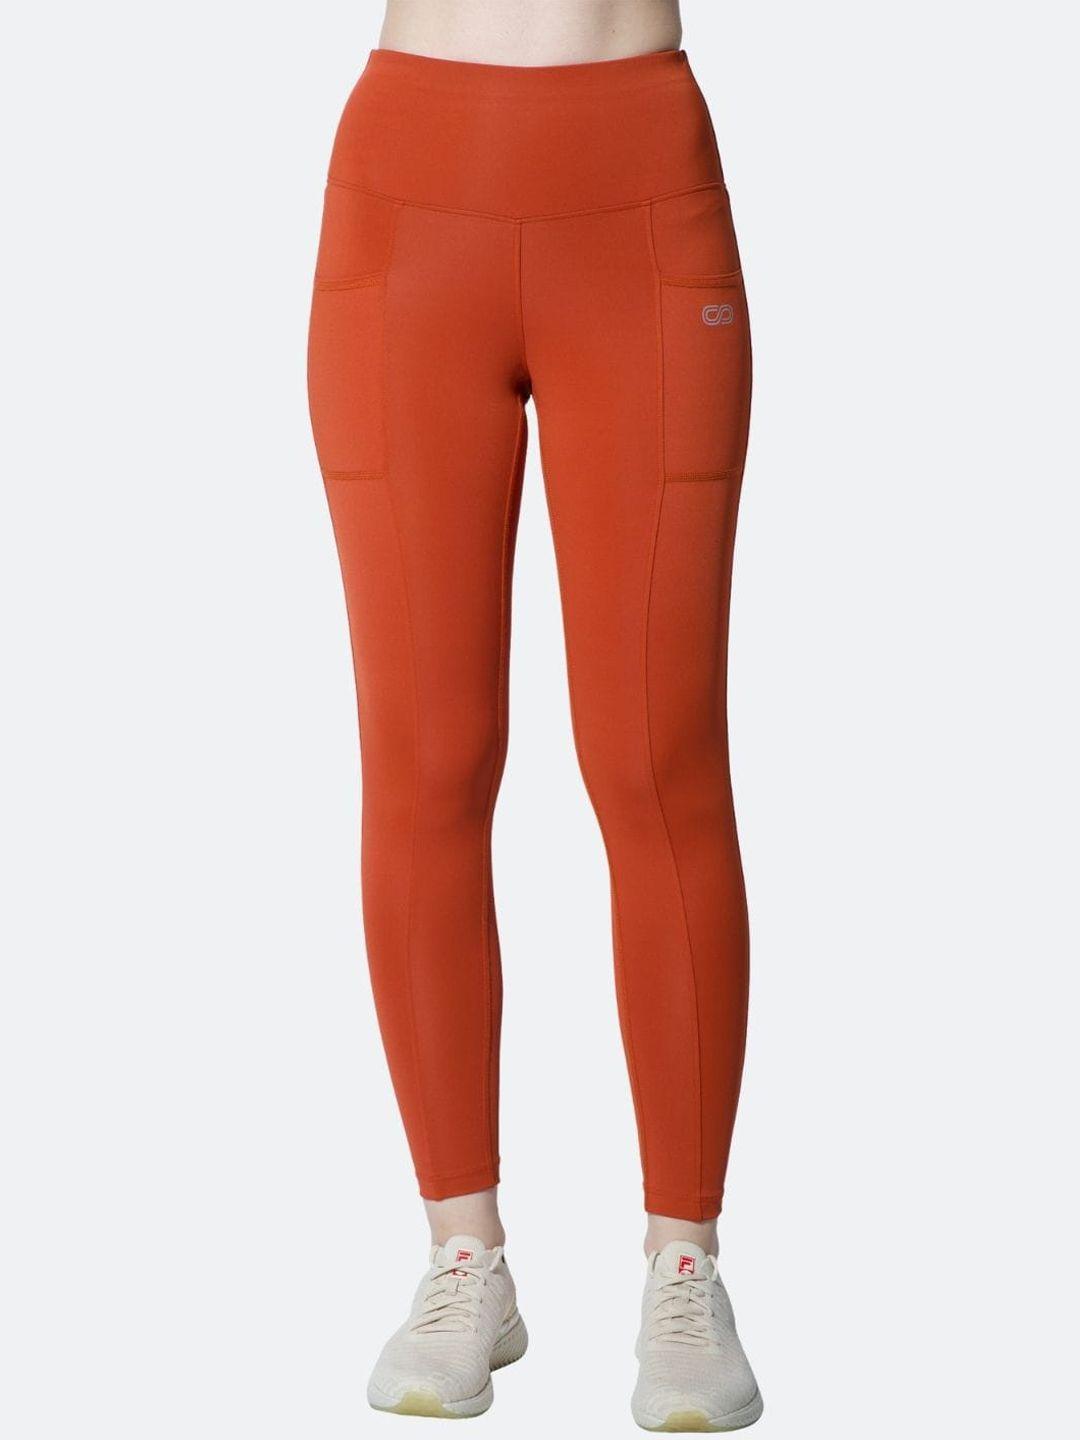 silvertraq women orange anti odour sports tights